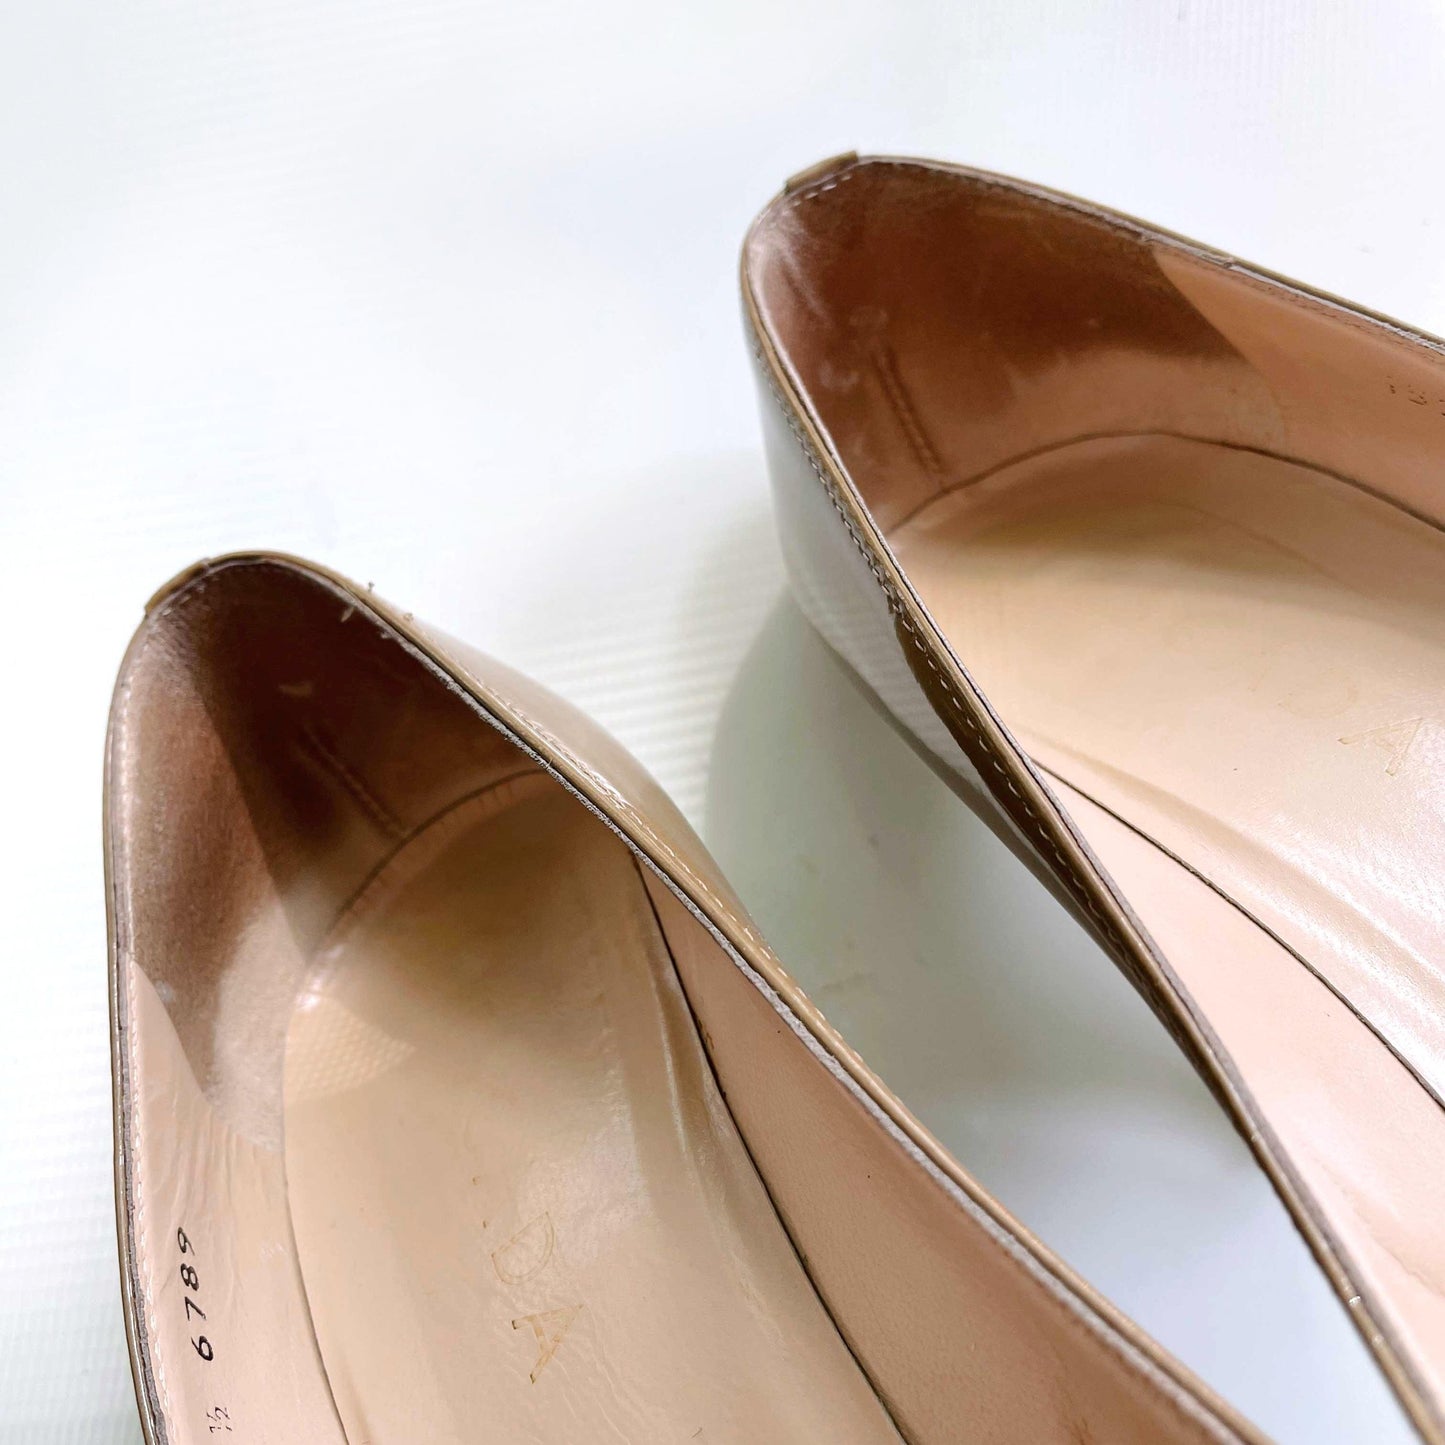 escada nude patent heel with white heel - size 38.5